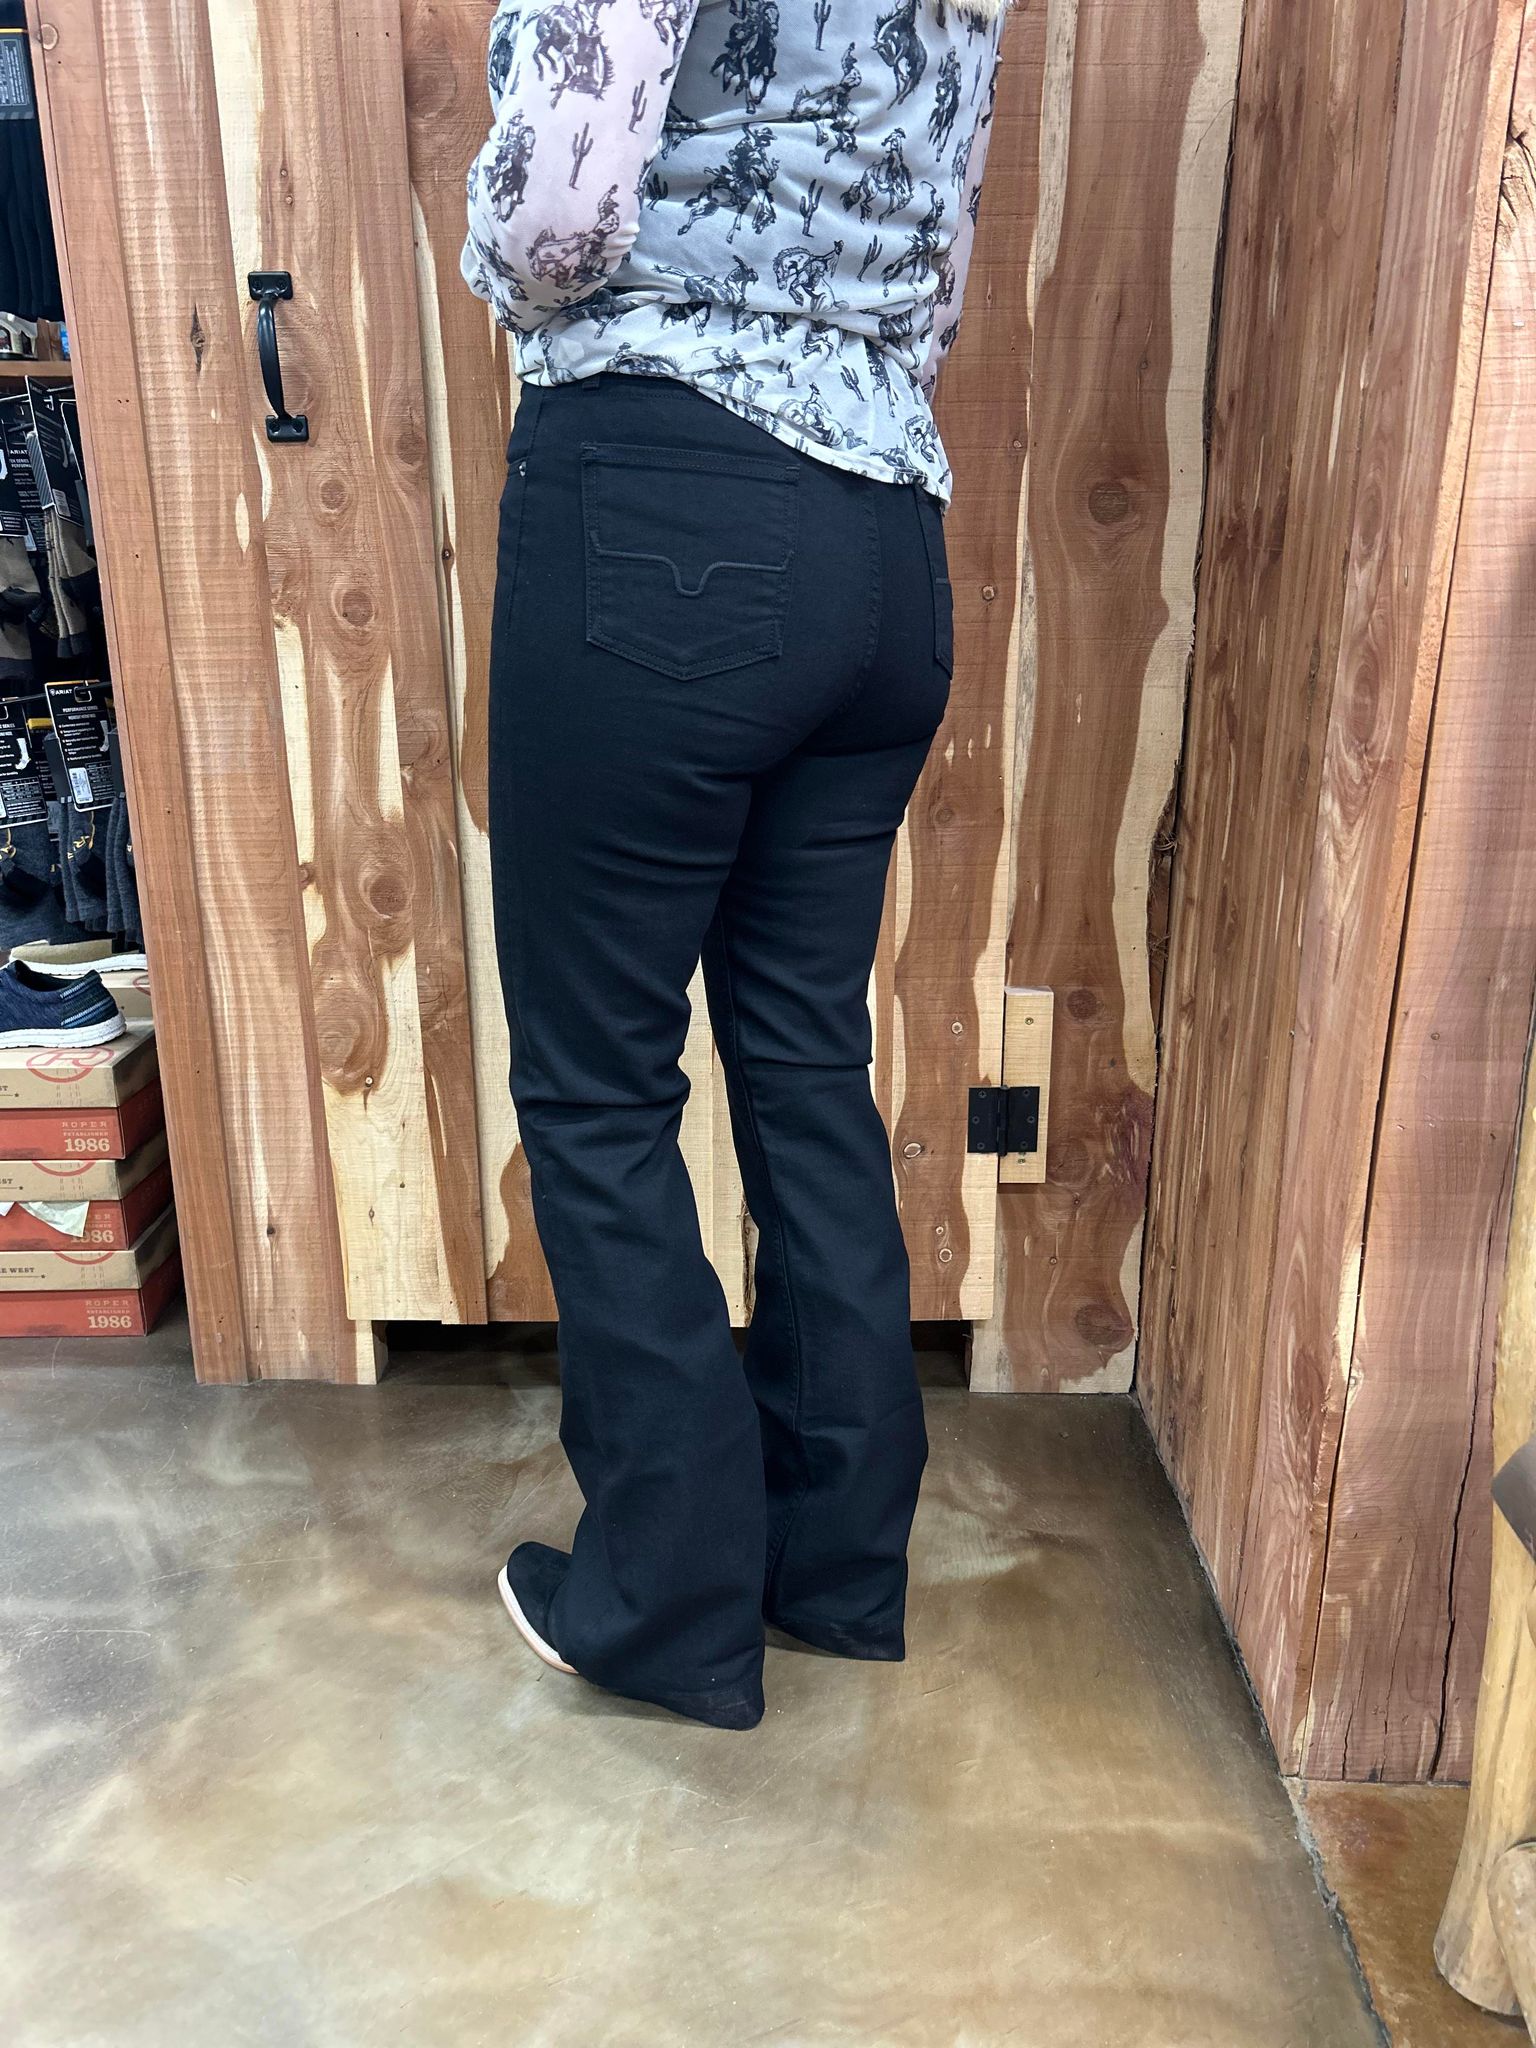 Kimes Ranch Jennifer Jeans in Black-Women's Denim-Kimes Ranch-Lucky J Boots & More, Women's, Men's, & Kids Western Store Located in Carthage, MO